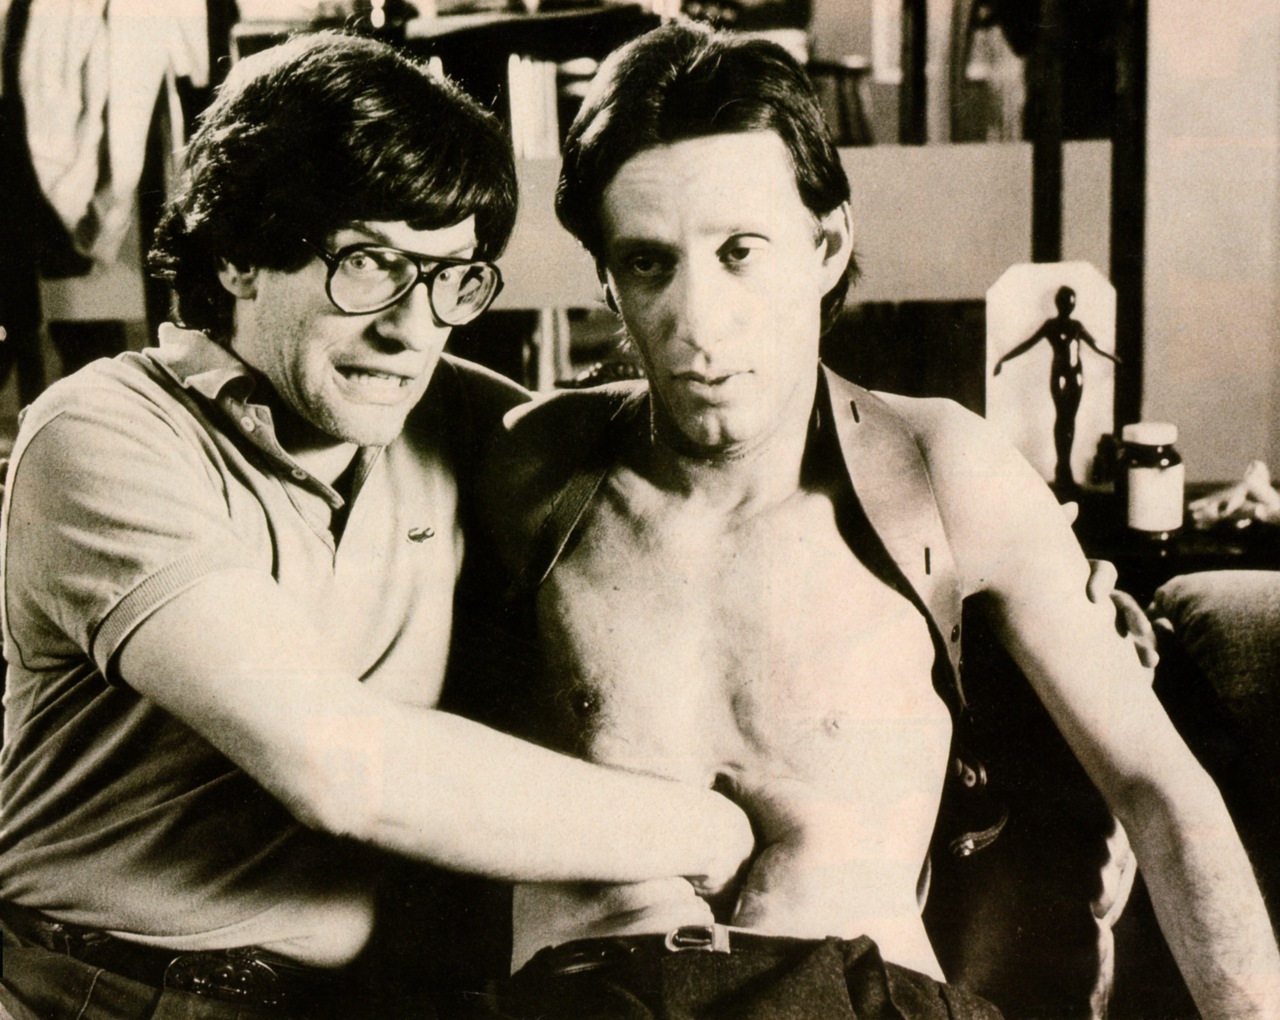 David Cronenberg and James Woods on the set of Videodrome